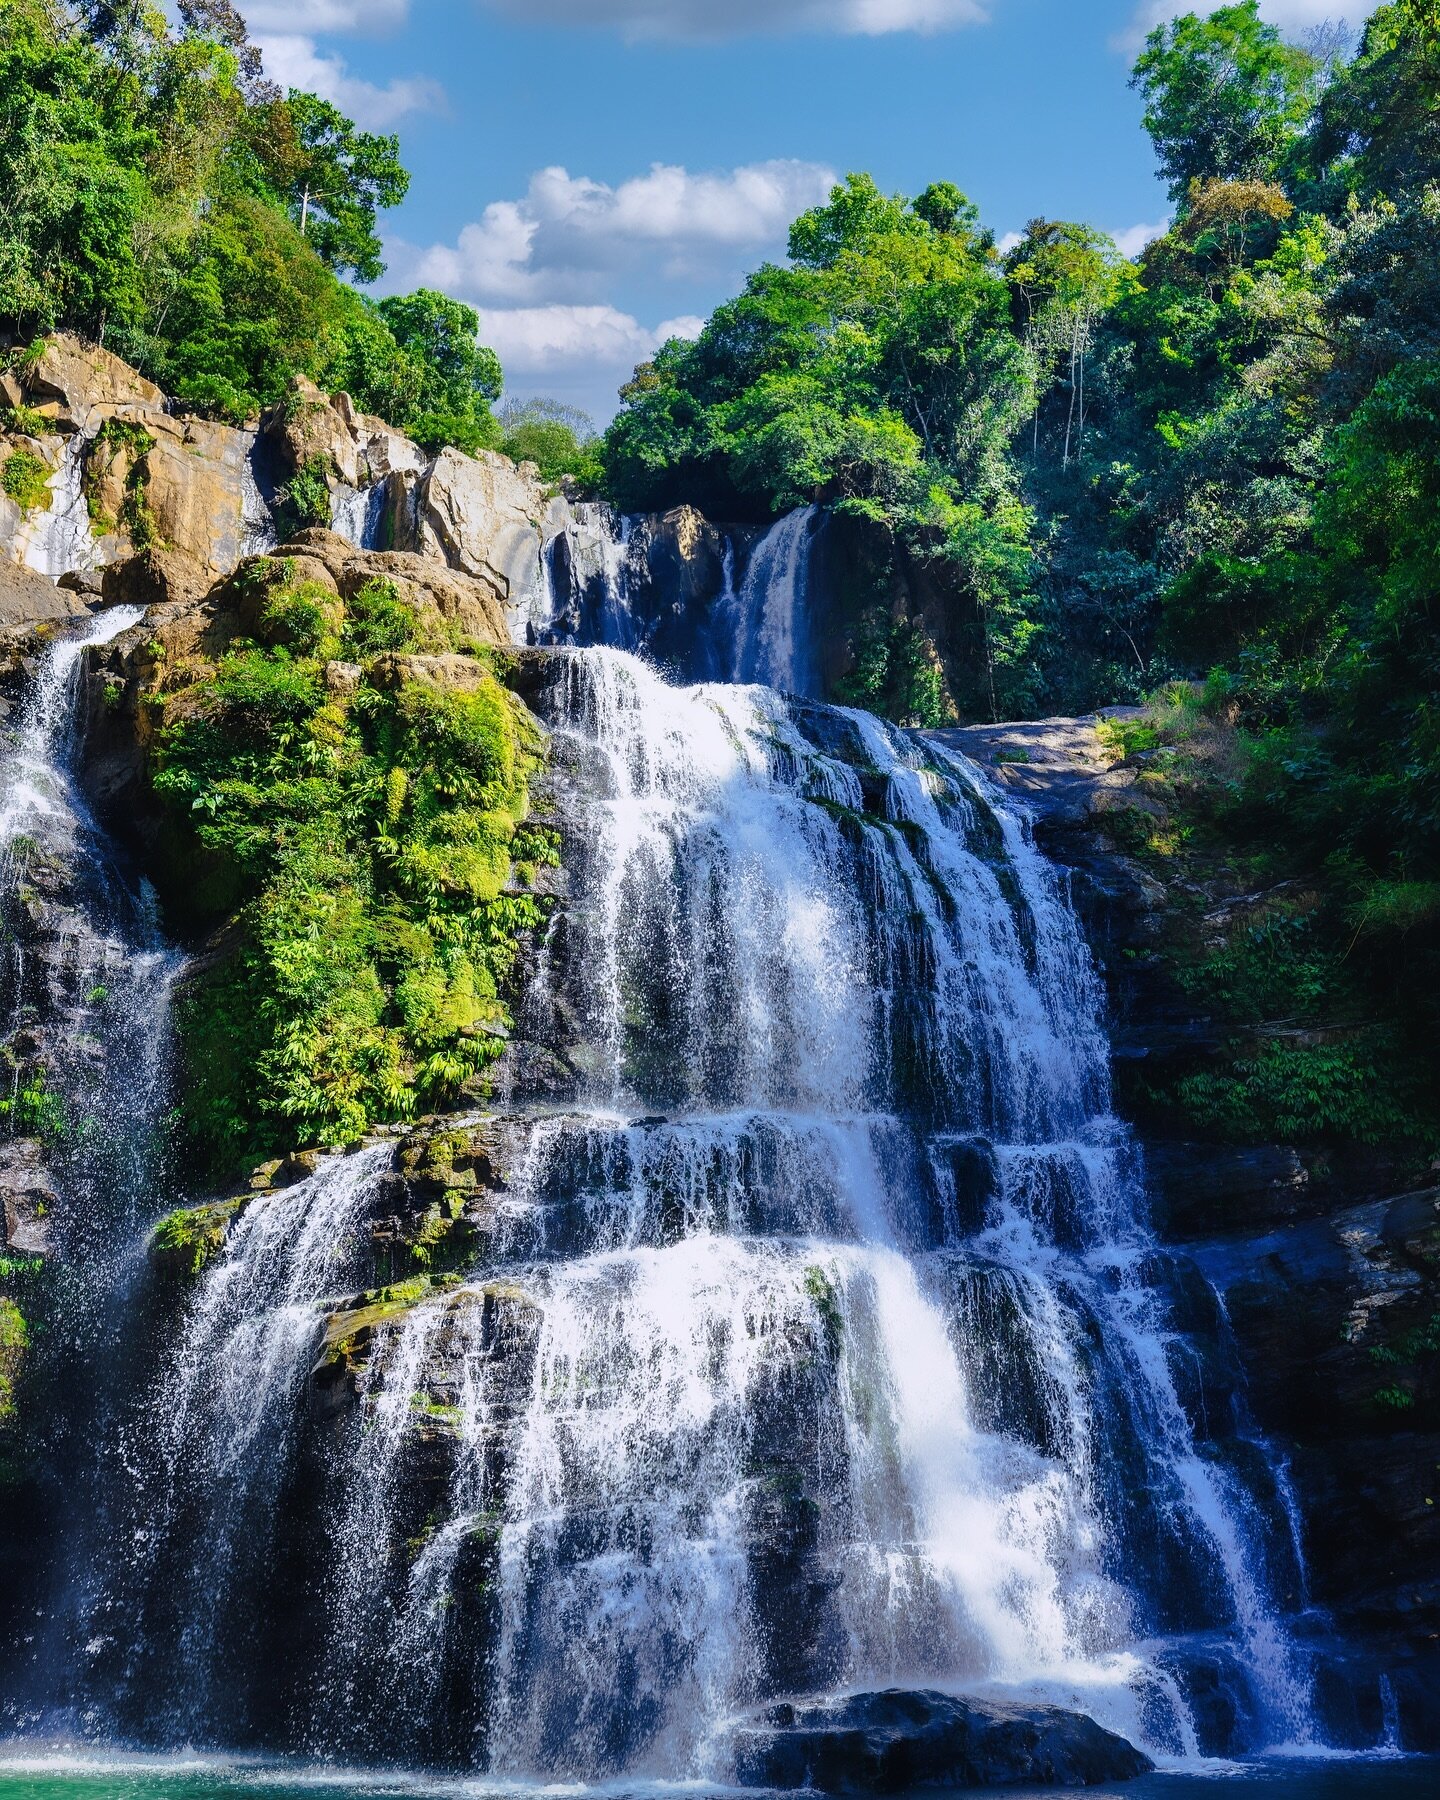 𝓣𝓱𝓮 𝓫𝓮𝓰𝓲𝓷𝓷𝓲𝓷𝓰

&hellip;&hellip;Pura Vida 

#naturephotography #costarica #waterfall #52frames_unexplored #dallasphotographer #fineartphotography #fineart #smallbusiness #smallbusinesstexas #hiking #travel #travelphotography